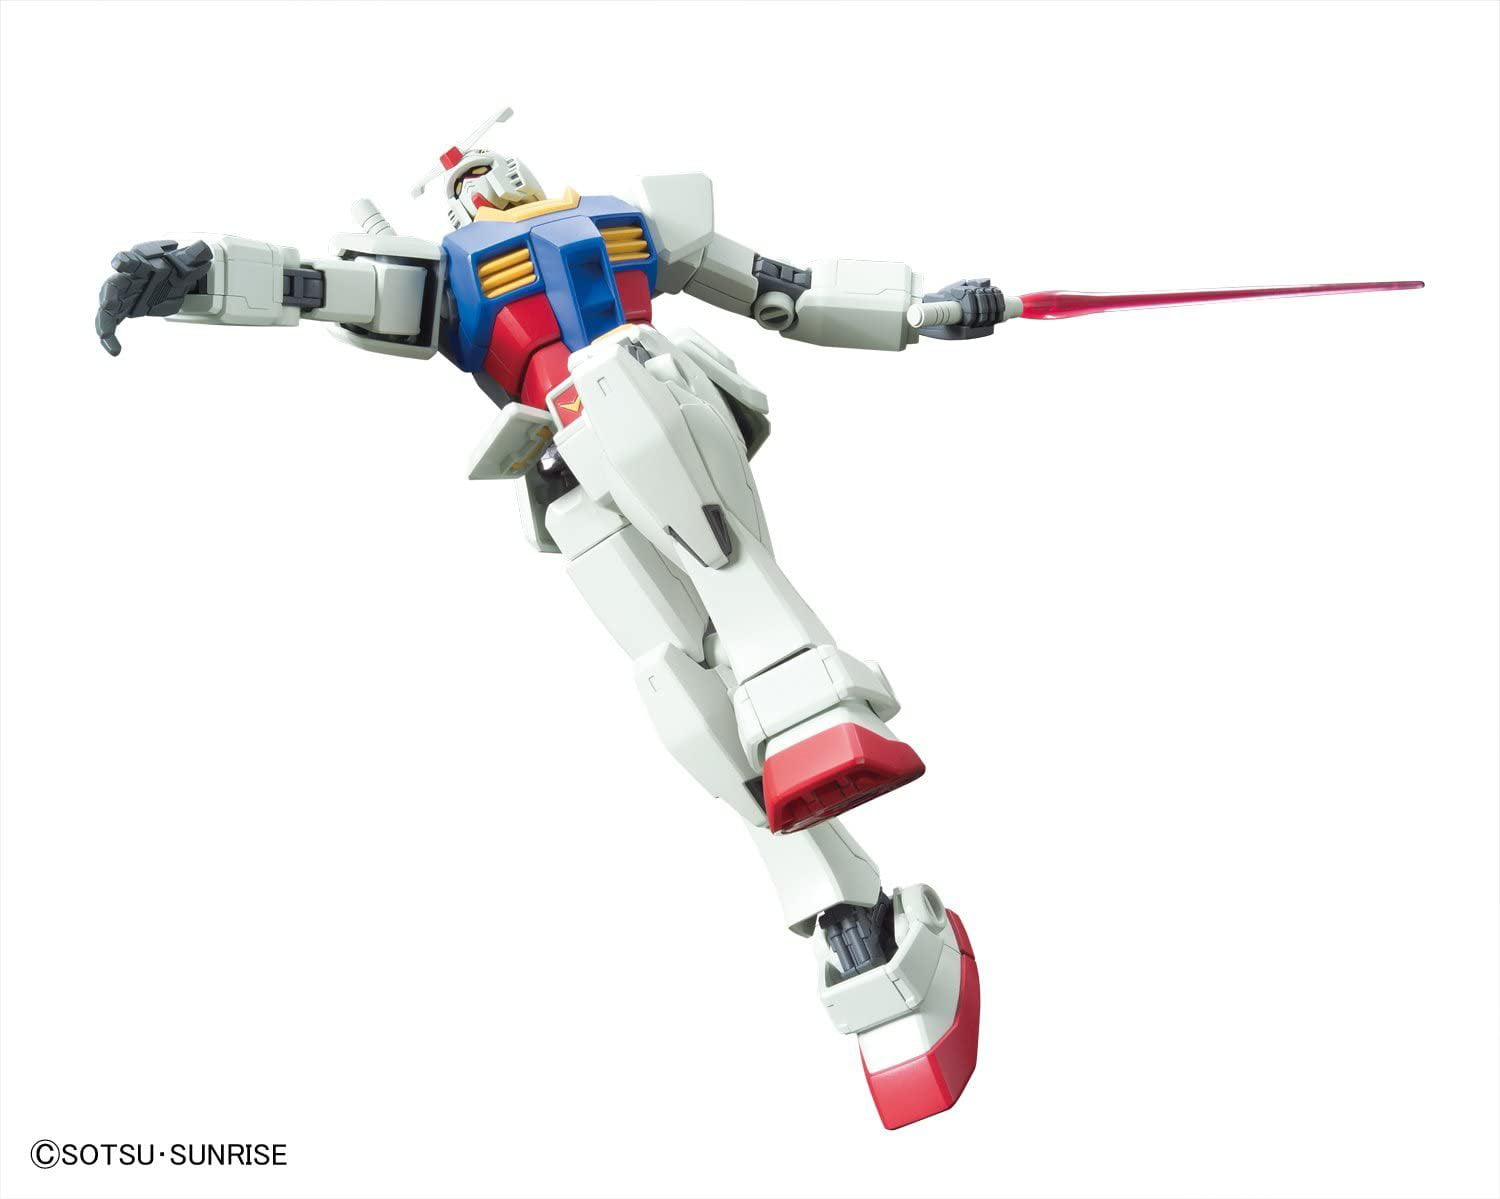 New Bandai Hobby HGUC RX-78-2 Gundam Revive Model Kit 1/144 Scale Free Shipping